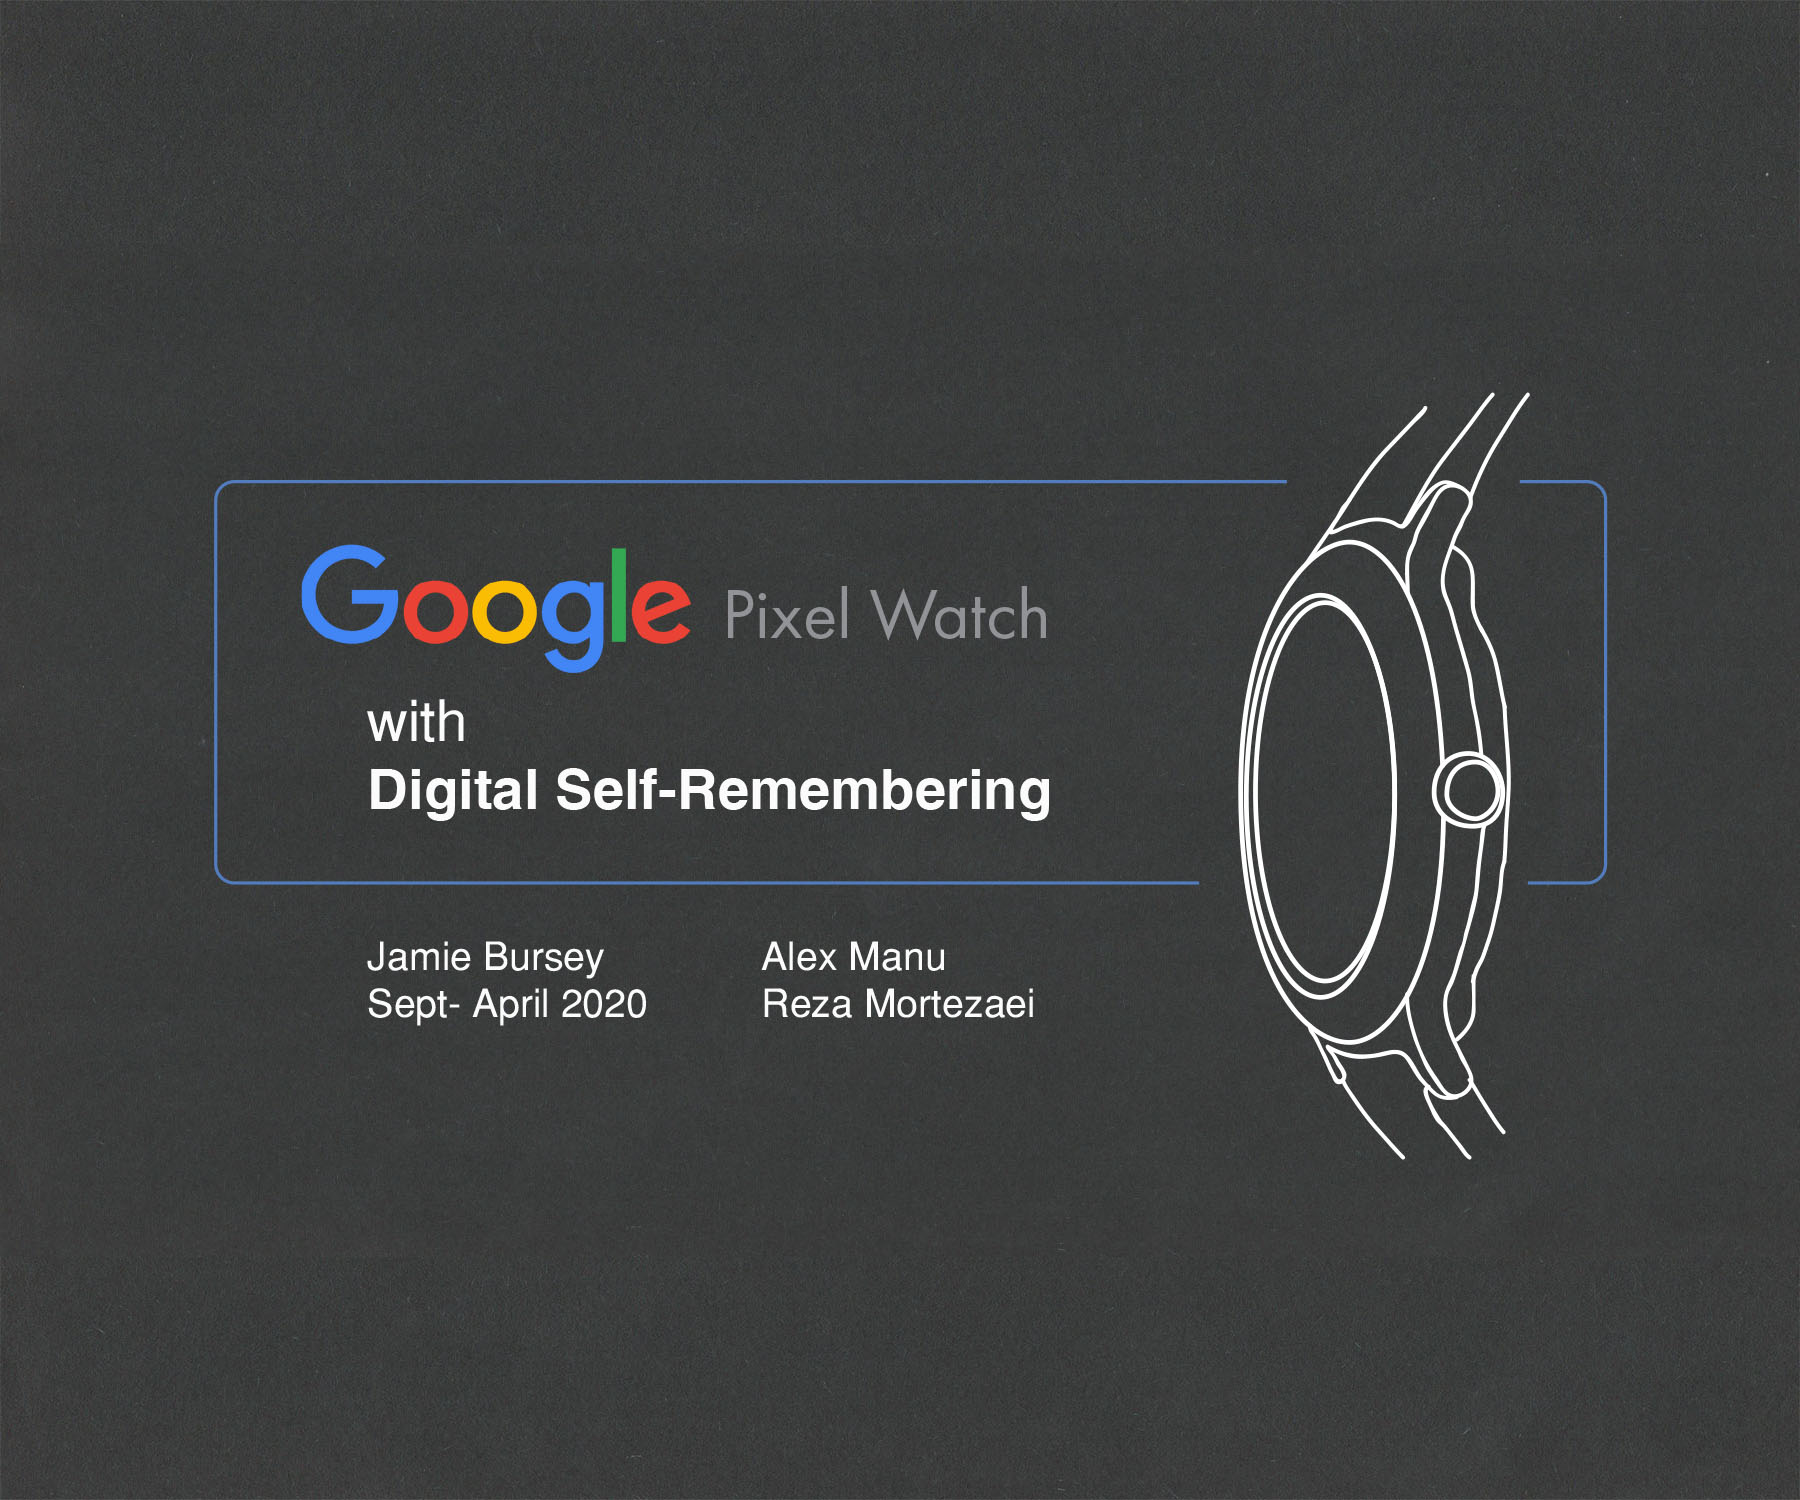 Google Pixel Watch With Digital Self-Remembering